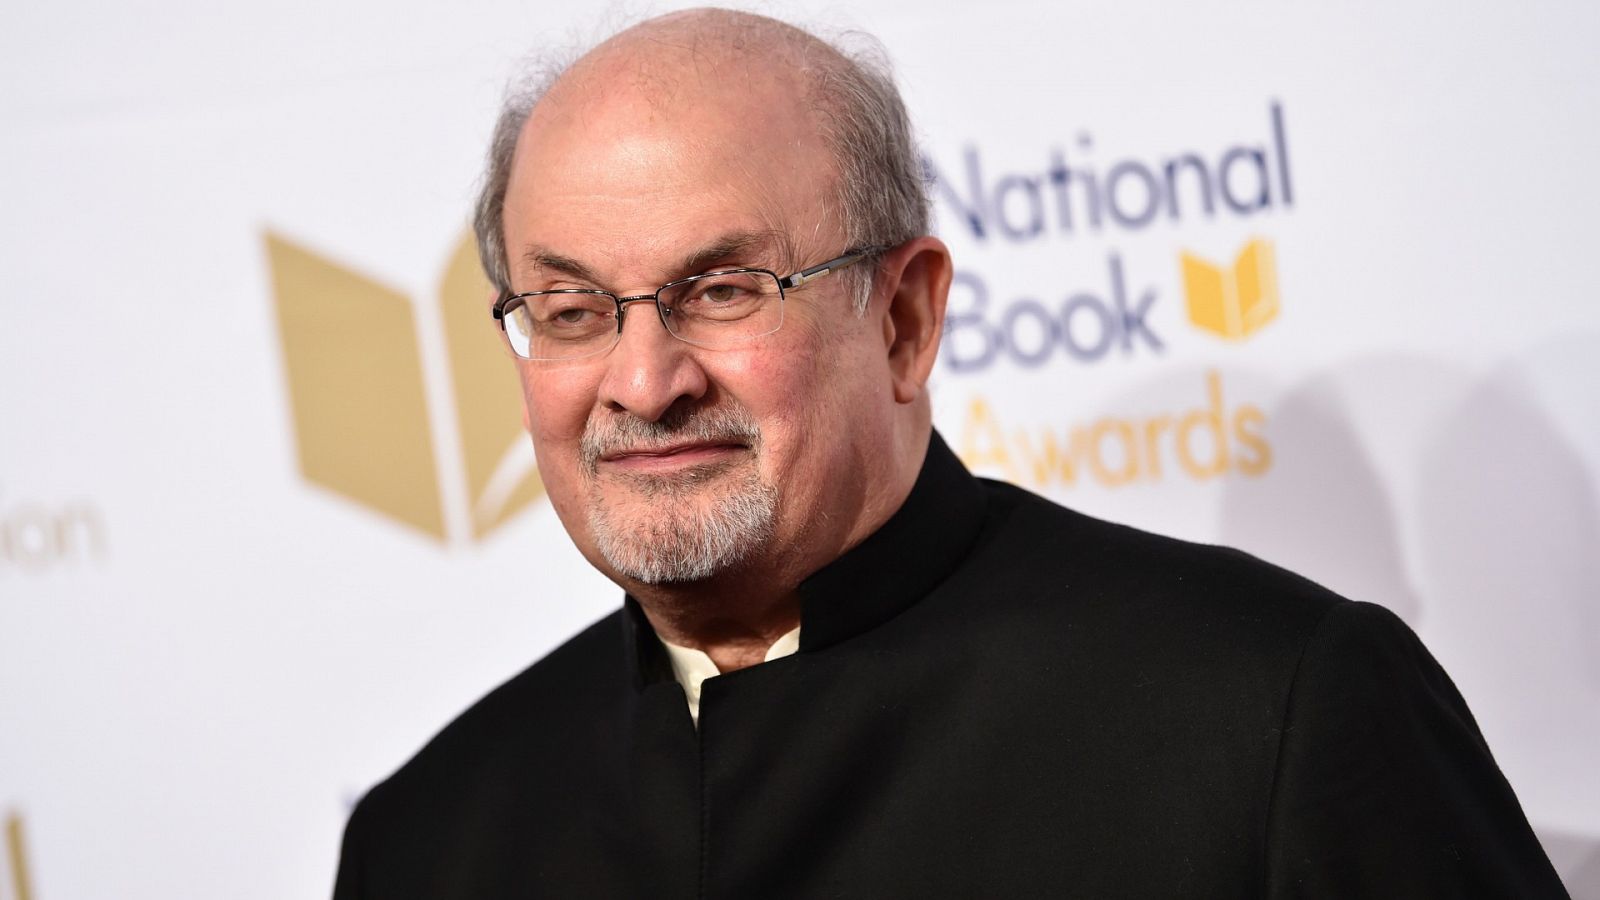 Rushdie evoluciona favorablemente, no precisa de respiración asistida